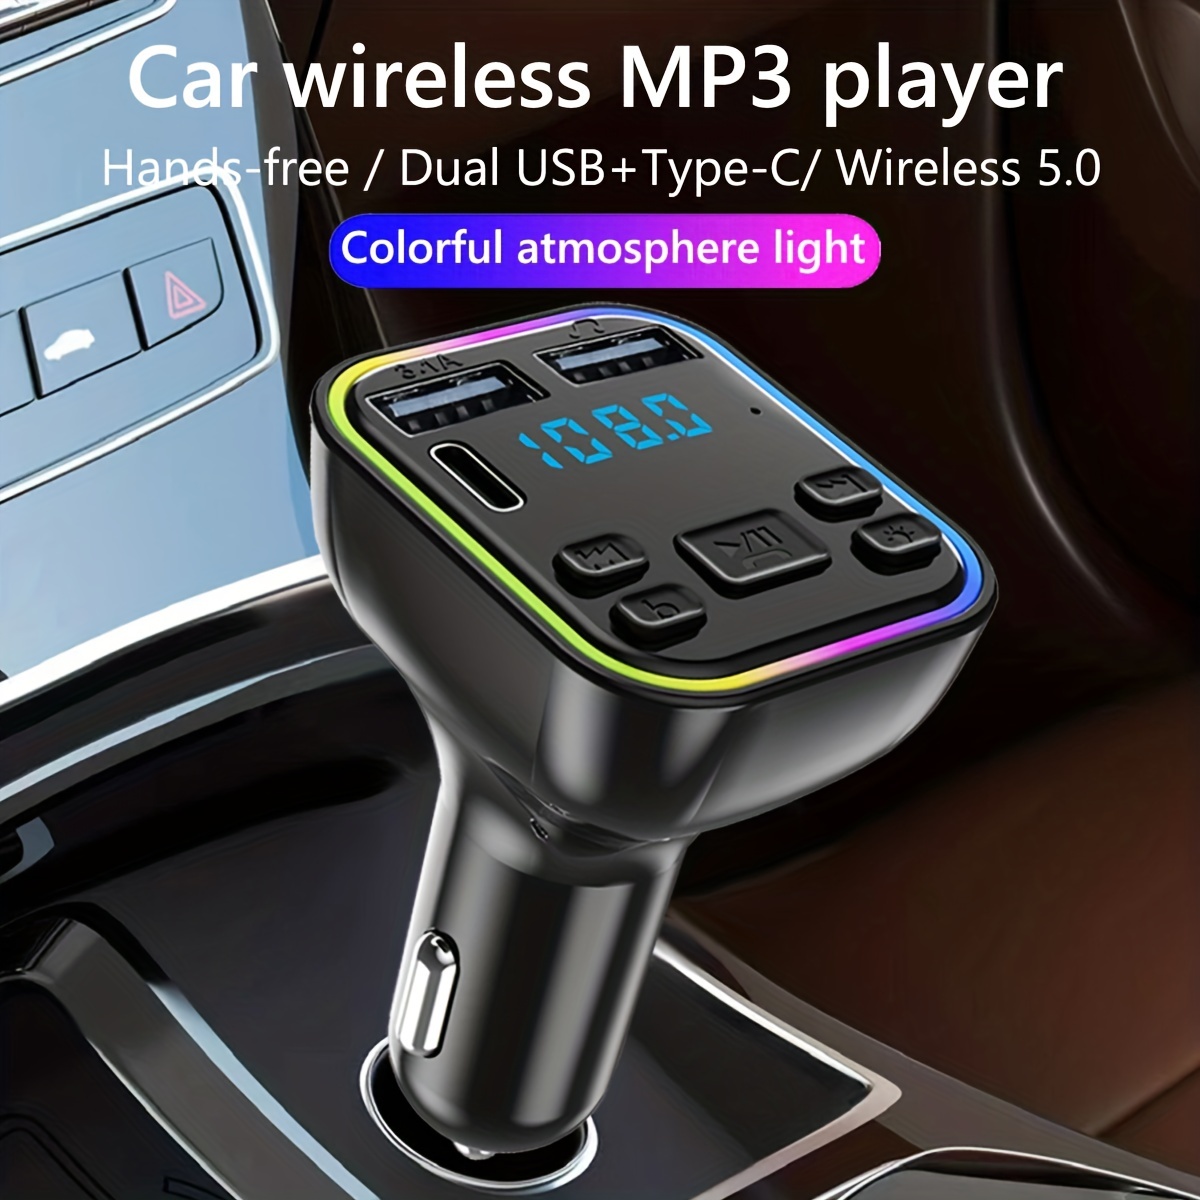 FM Transmitter Car Bluetooth 5.0 Receiver Handsfree Call Mini USB Bluetooth  Car Kit Auto Wireless Audio Car Adapter Accessories